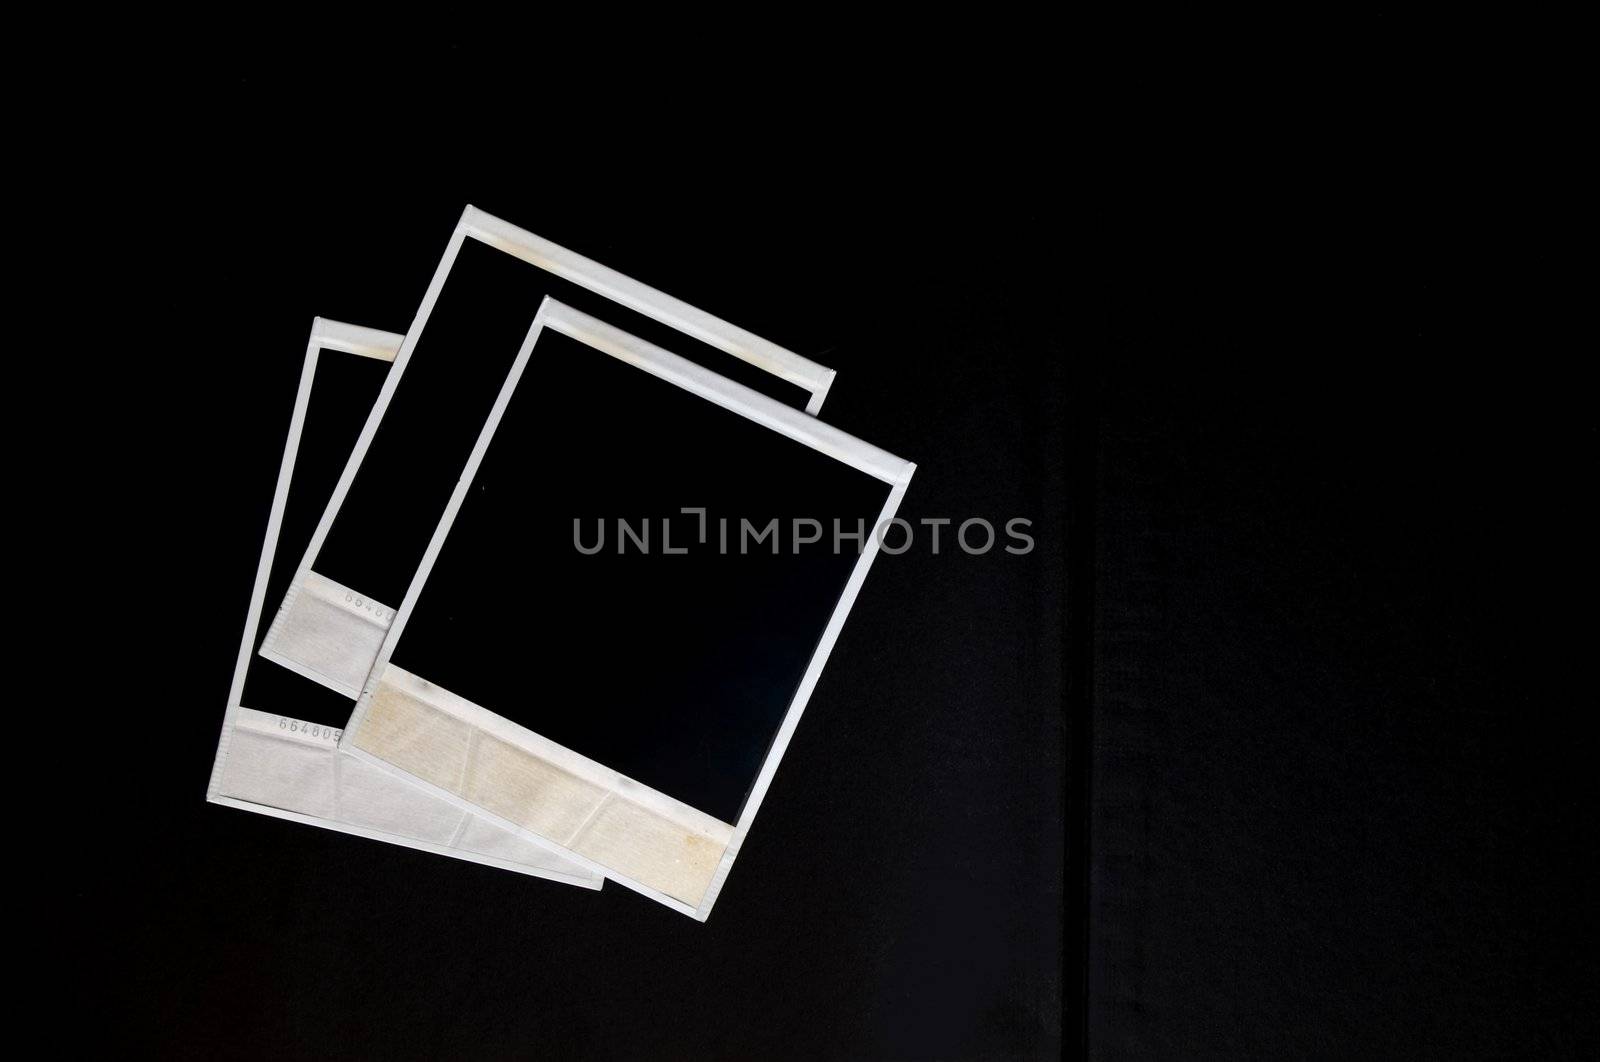 An image of white frames on black background